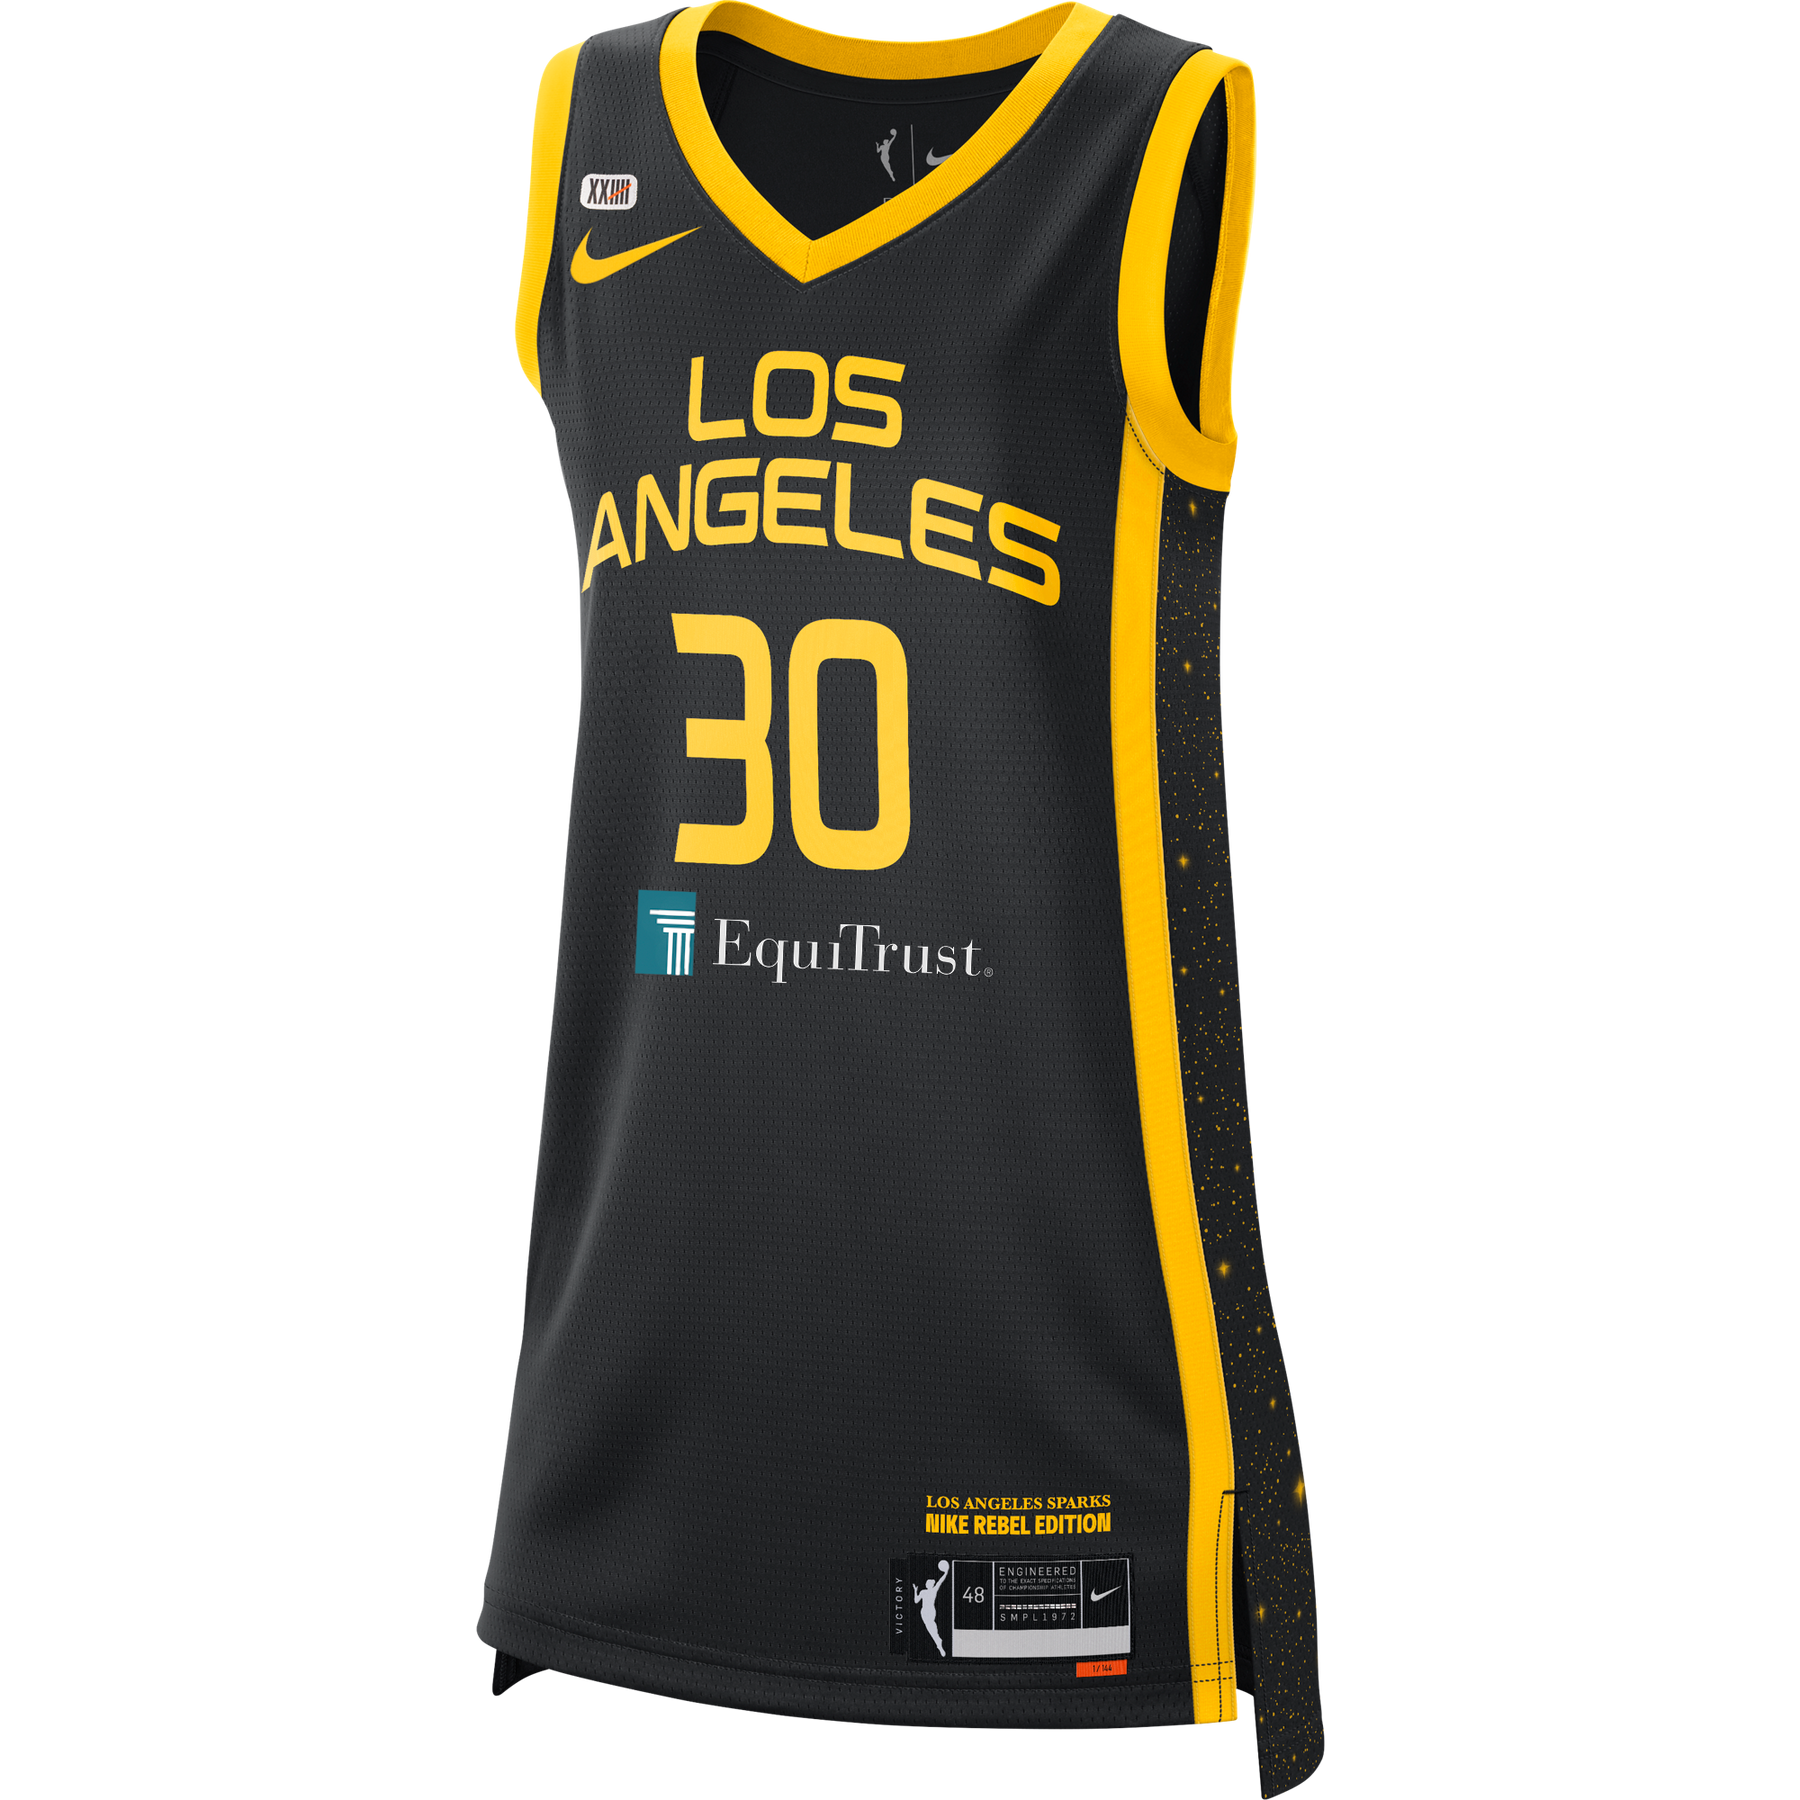 Los Angeles Sparks sign seven-figure UCLA Health jersey